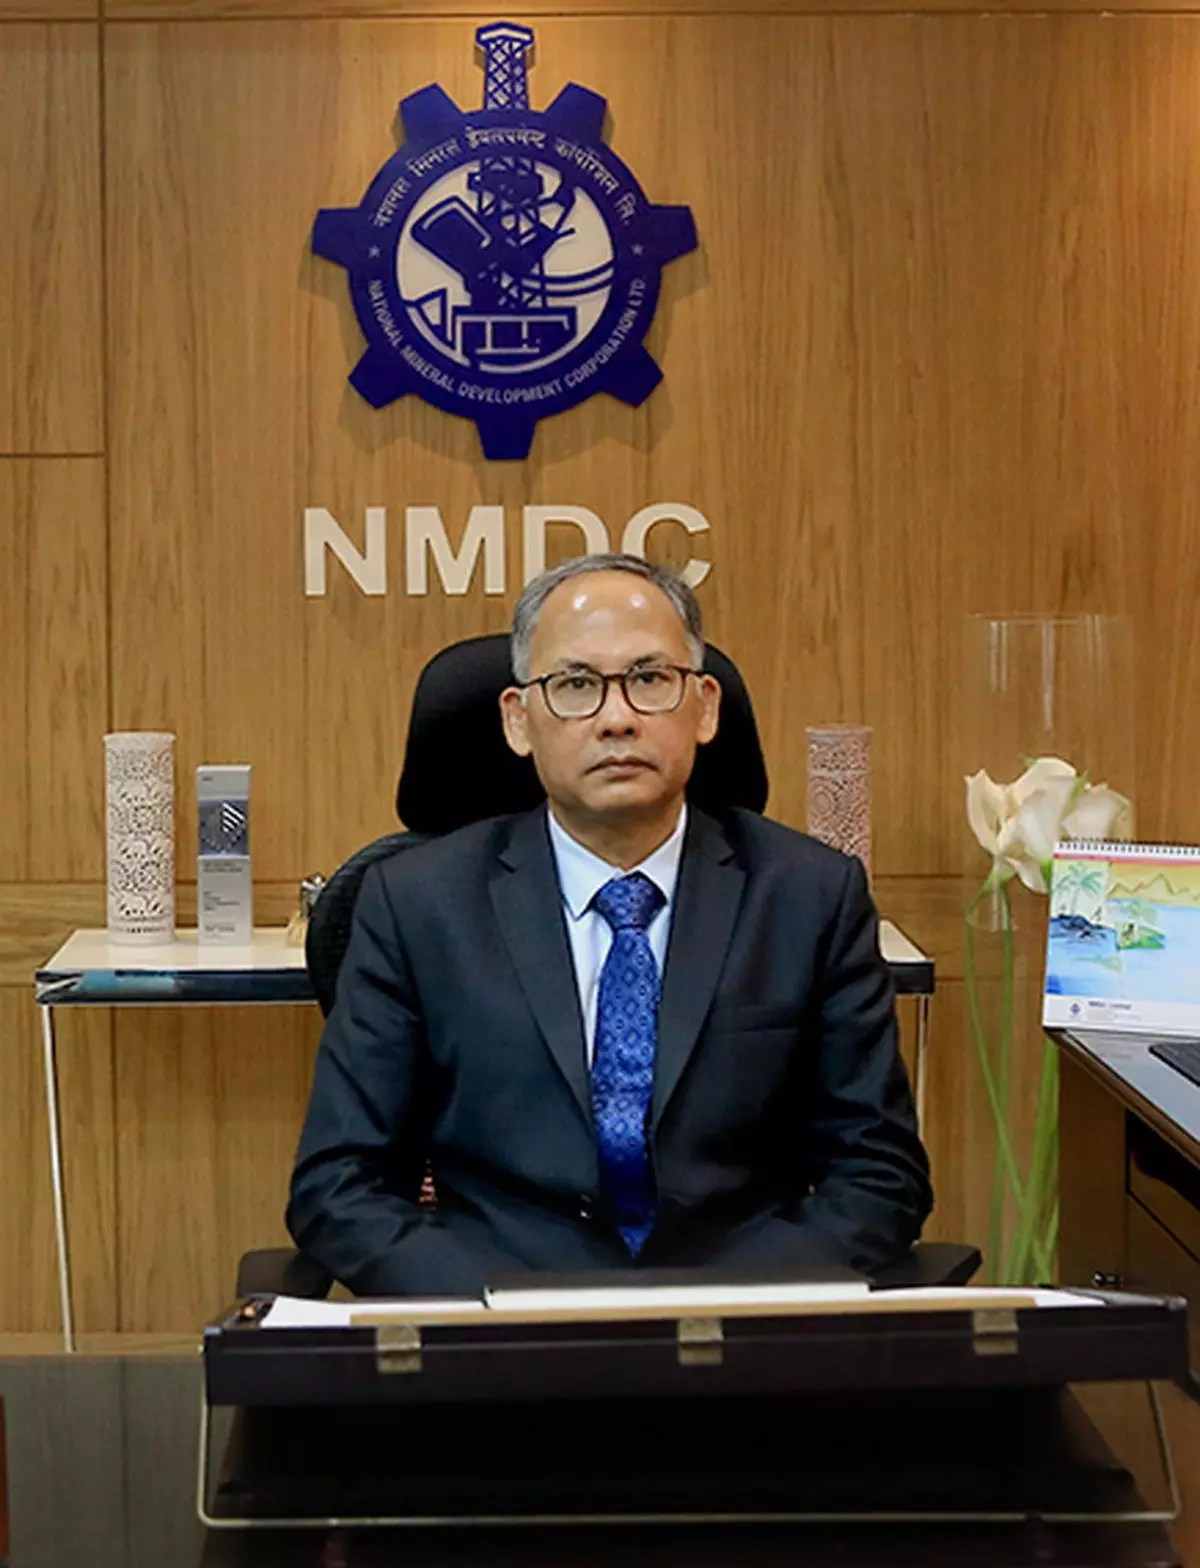 Sumit Deb, Chairman and Managing Director, NMDC Ltd